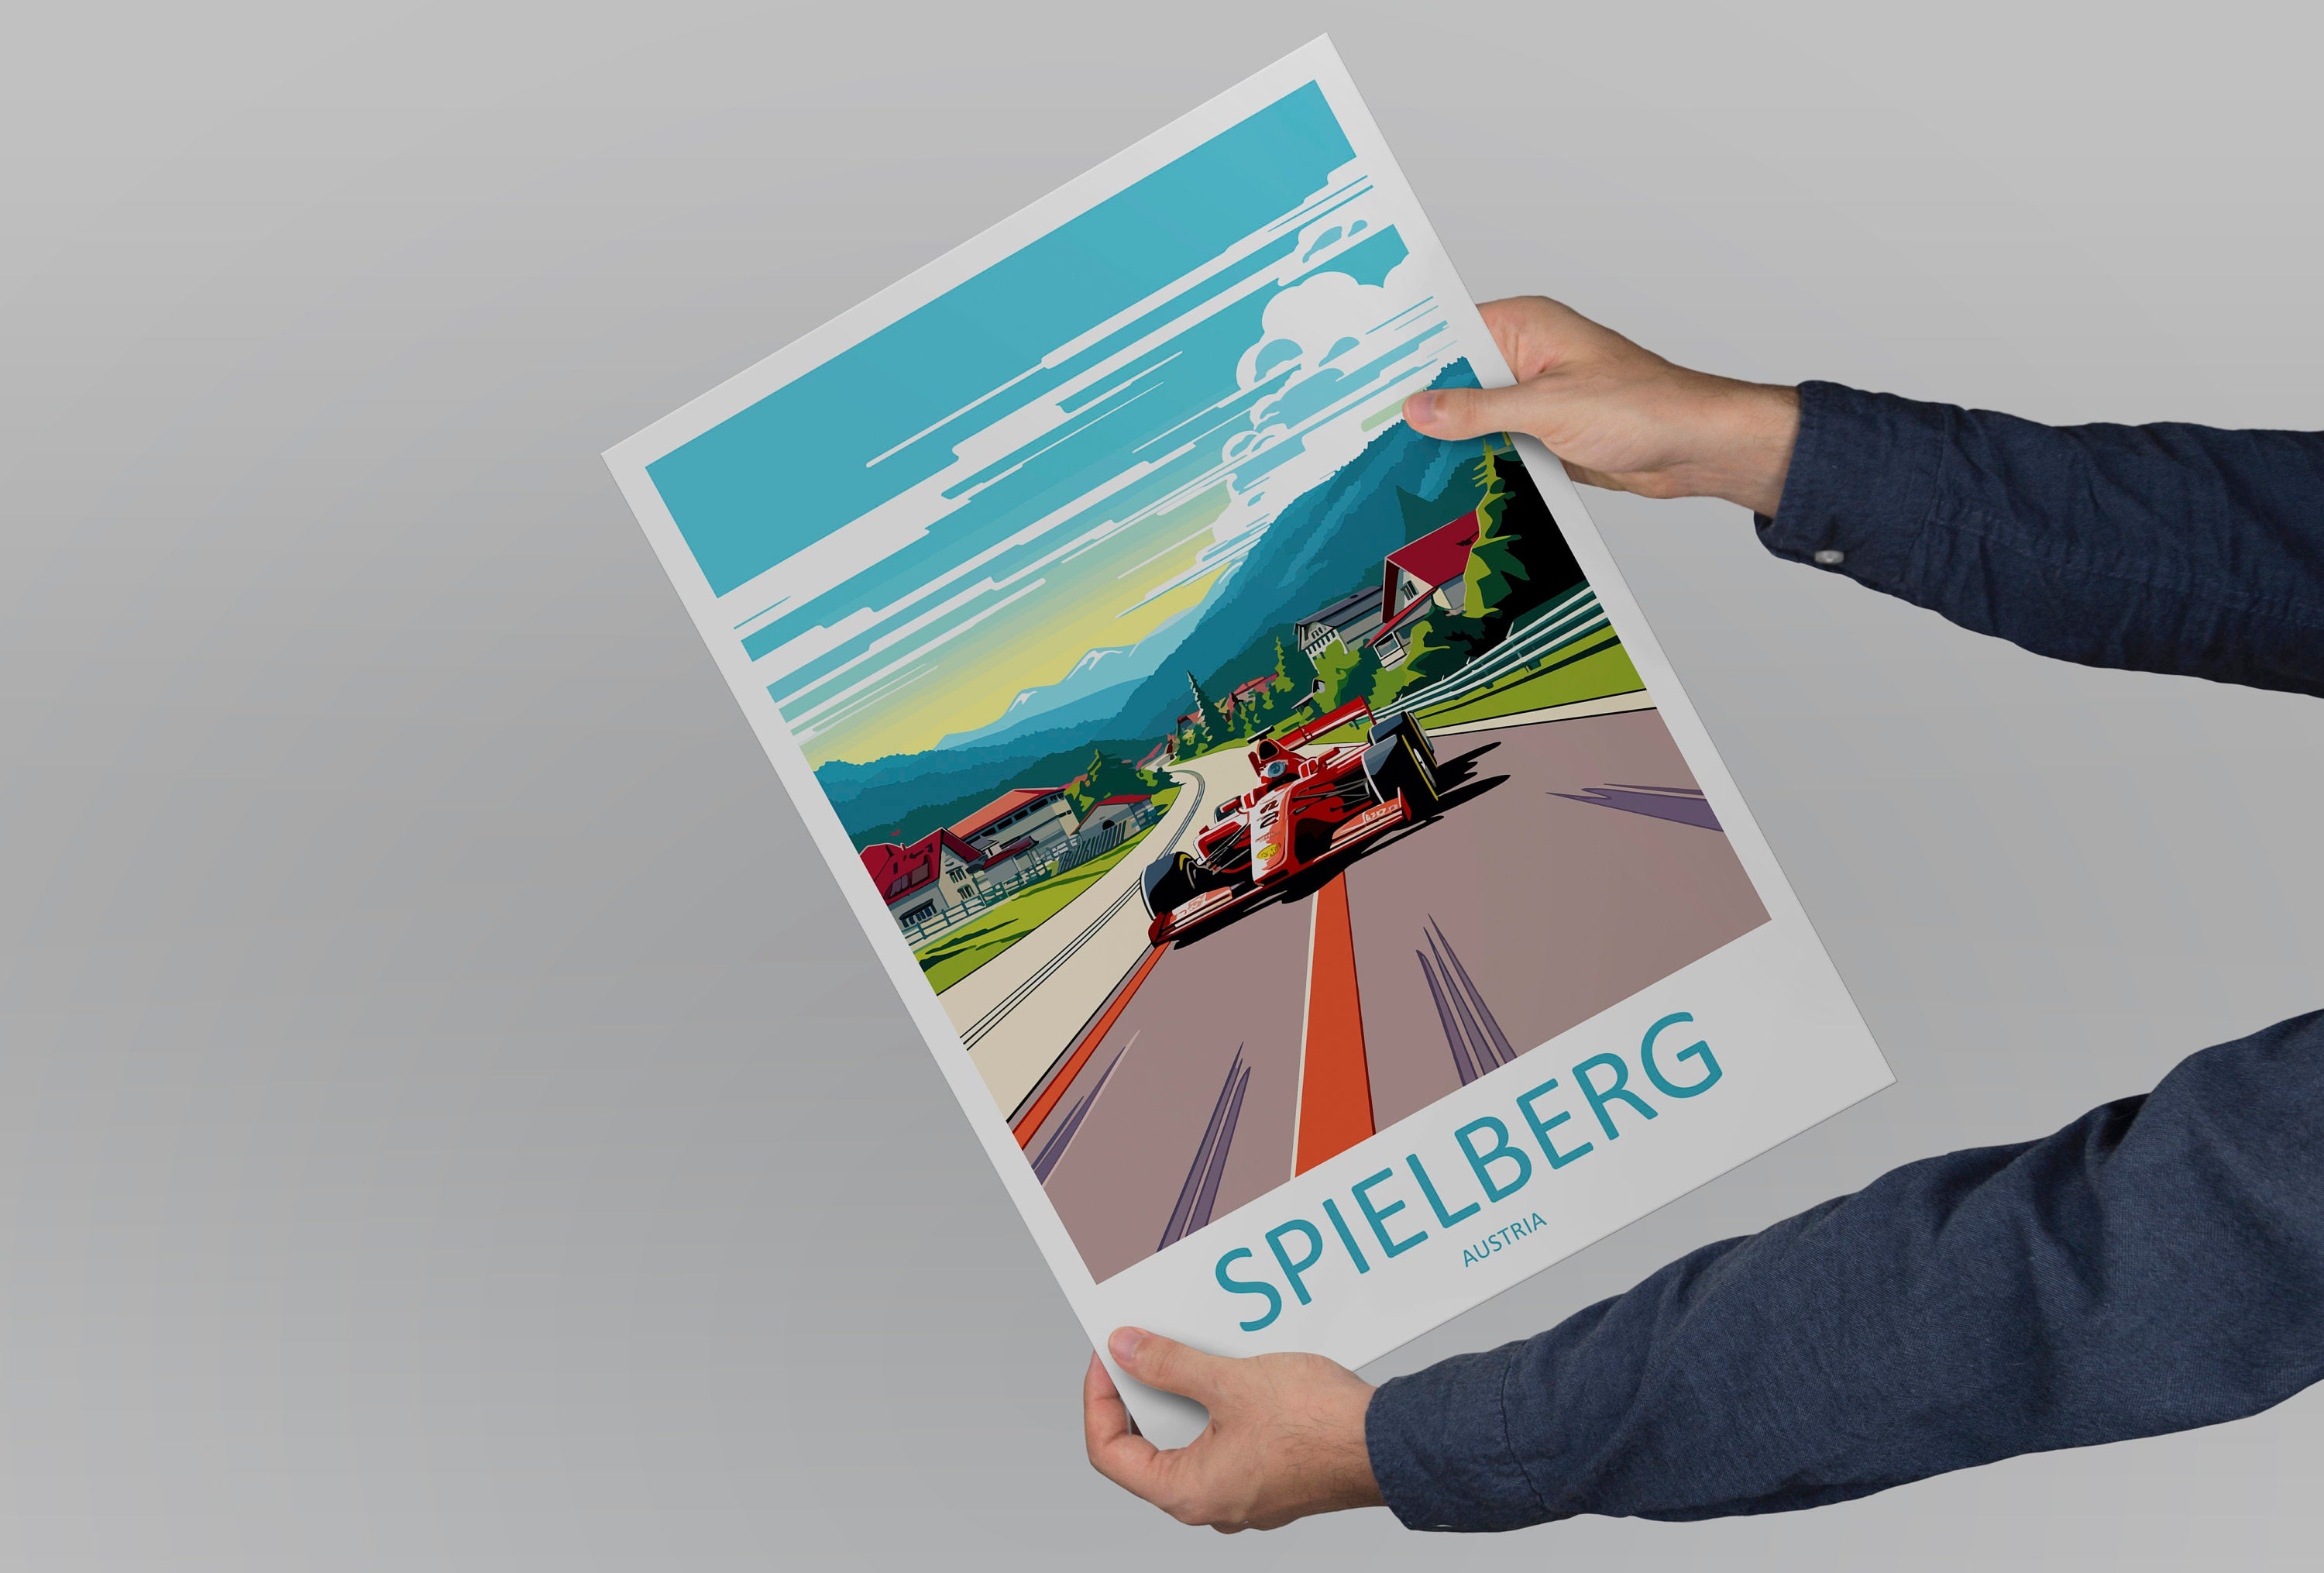 Spielberg Travel Print Wall Decor Spielberg Circuit Poster Motorsport Travel Print Art Print Racing Illustration Austria Race car Travel Art